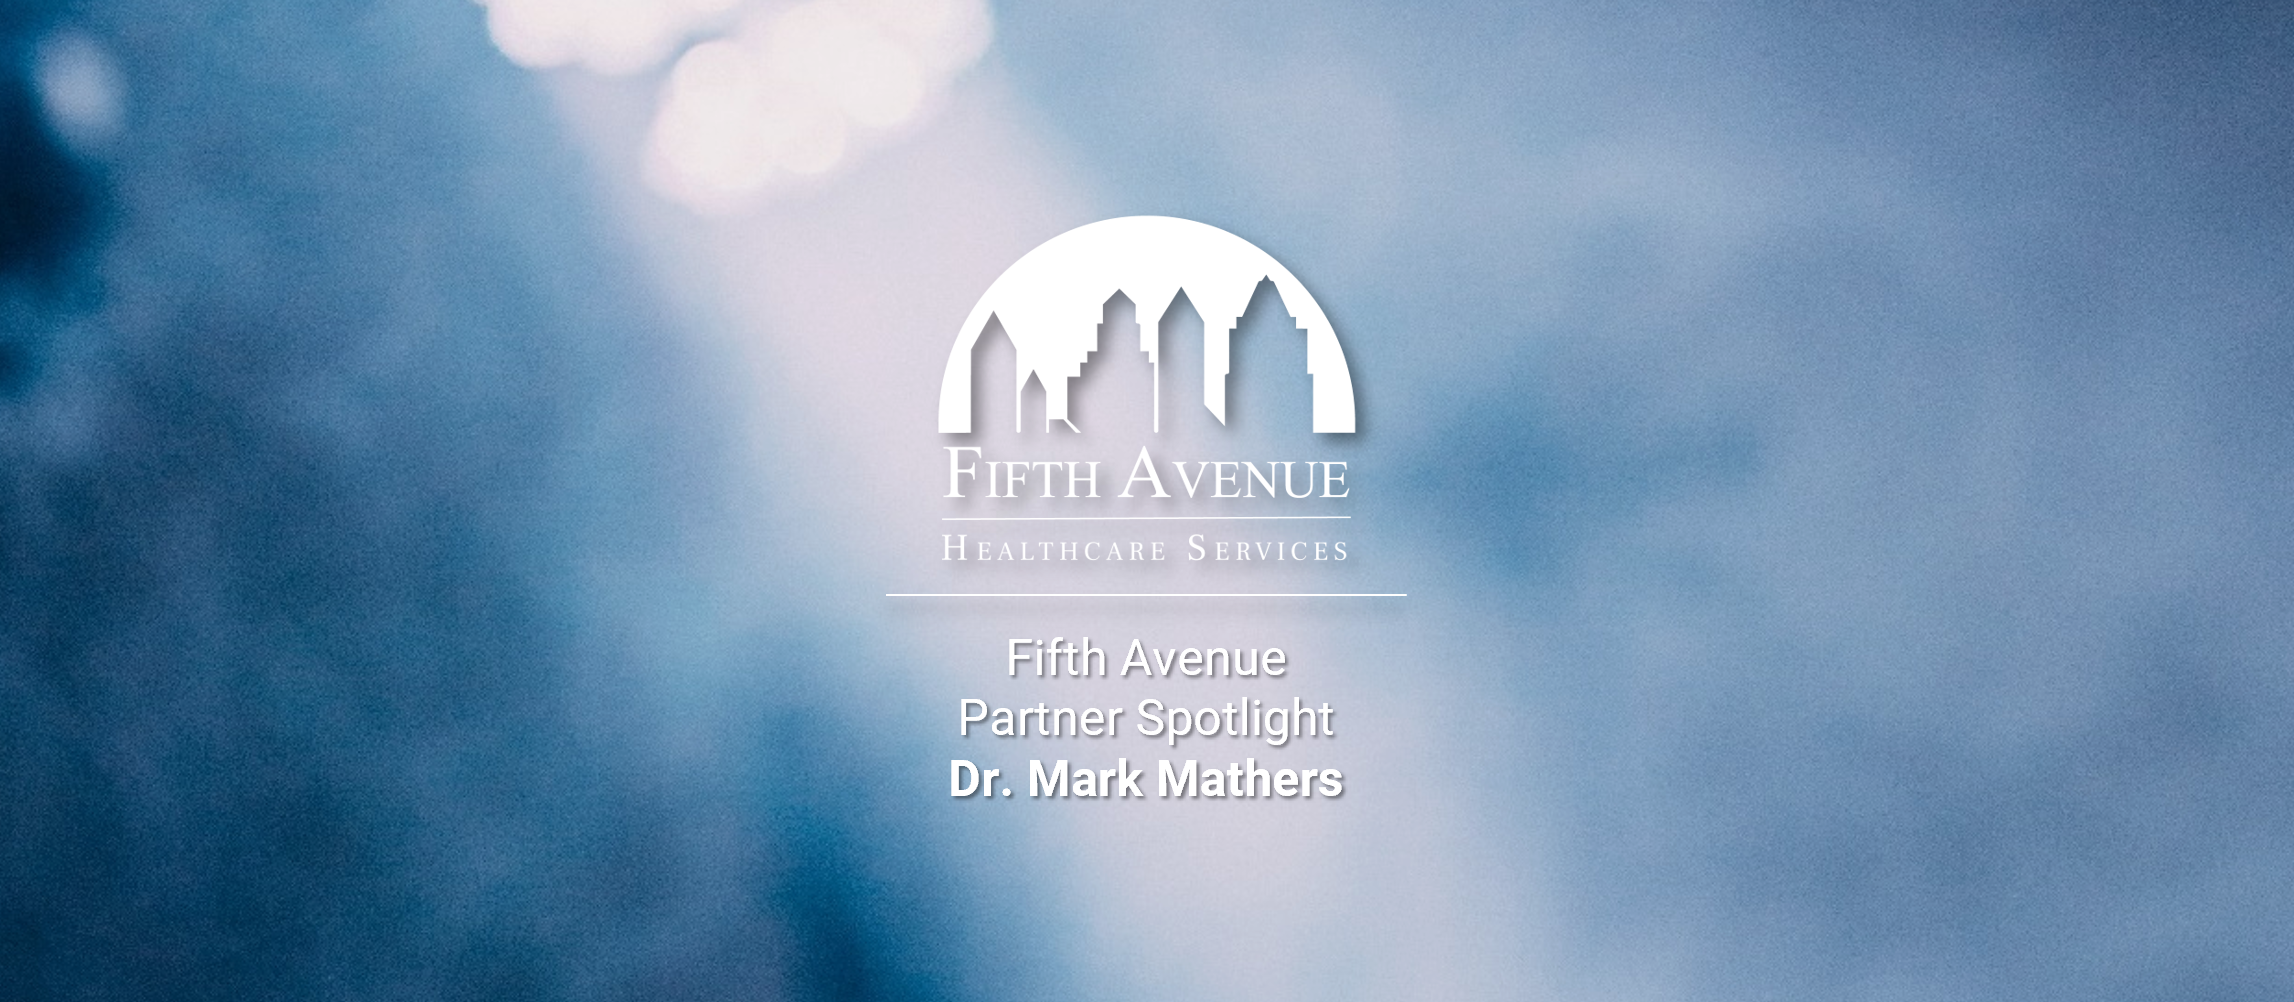 Fifth Avenue Partnership Spotlight Dr. Mark Mathers